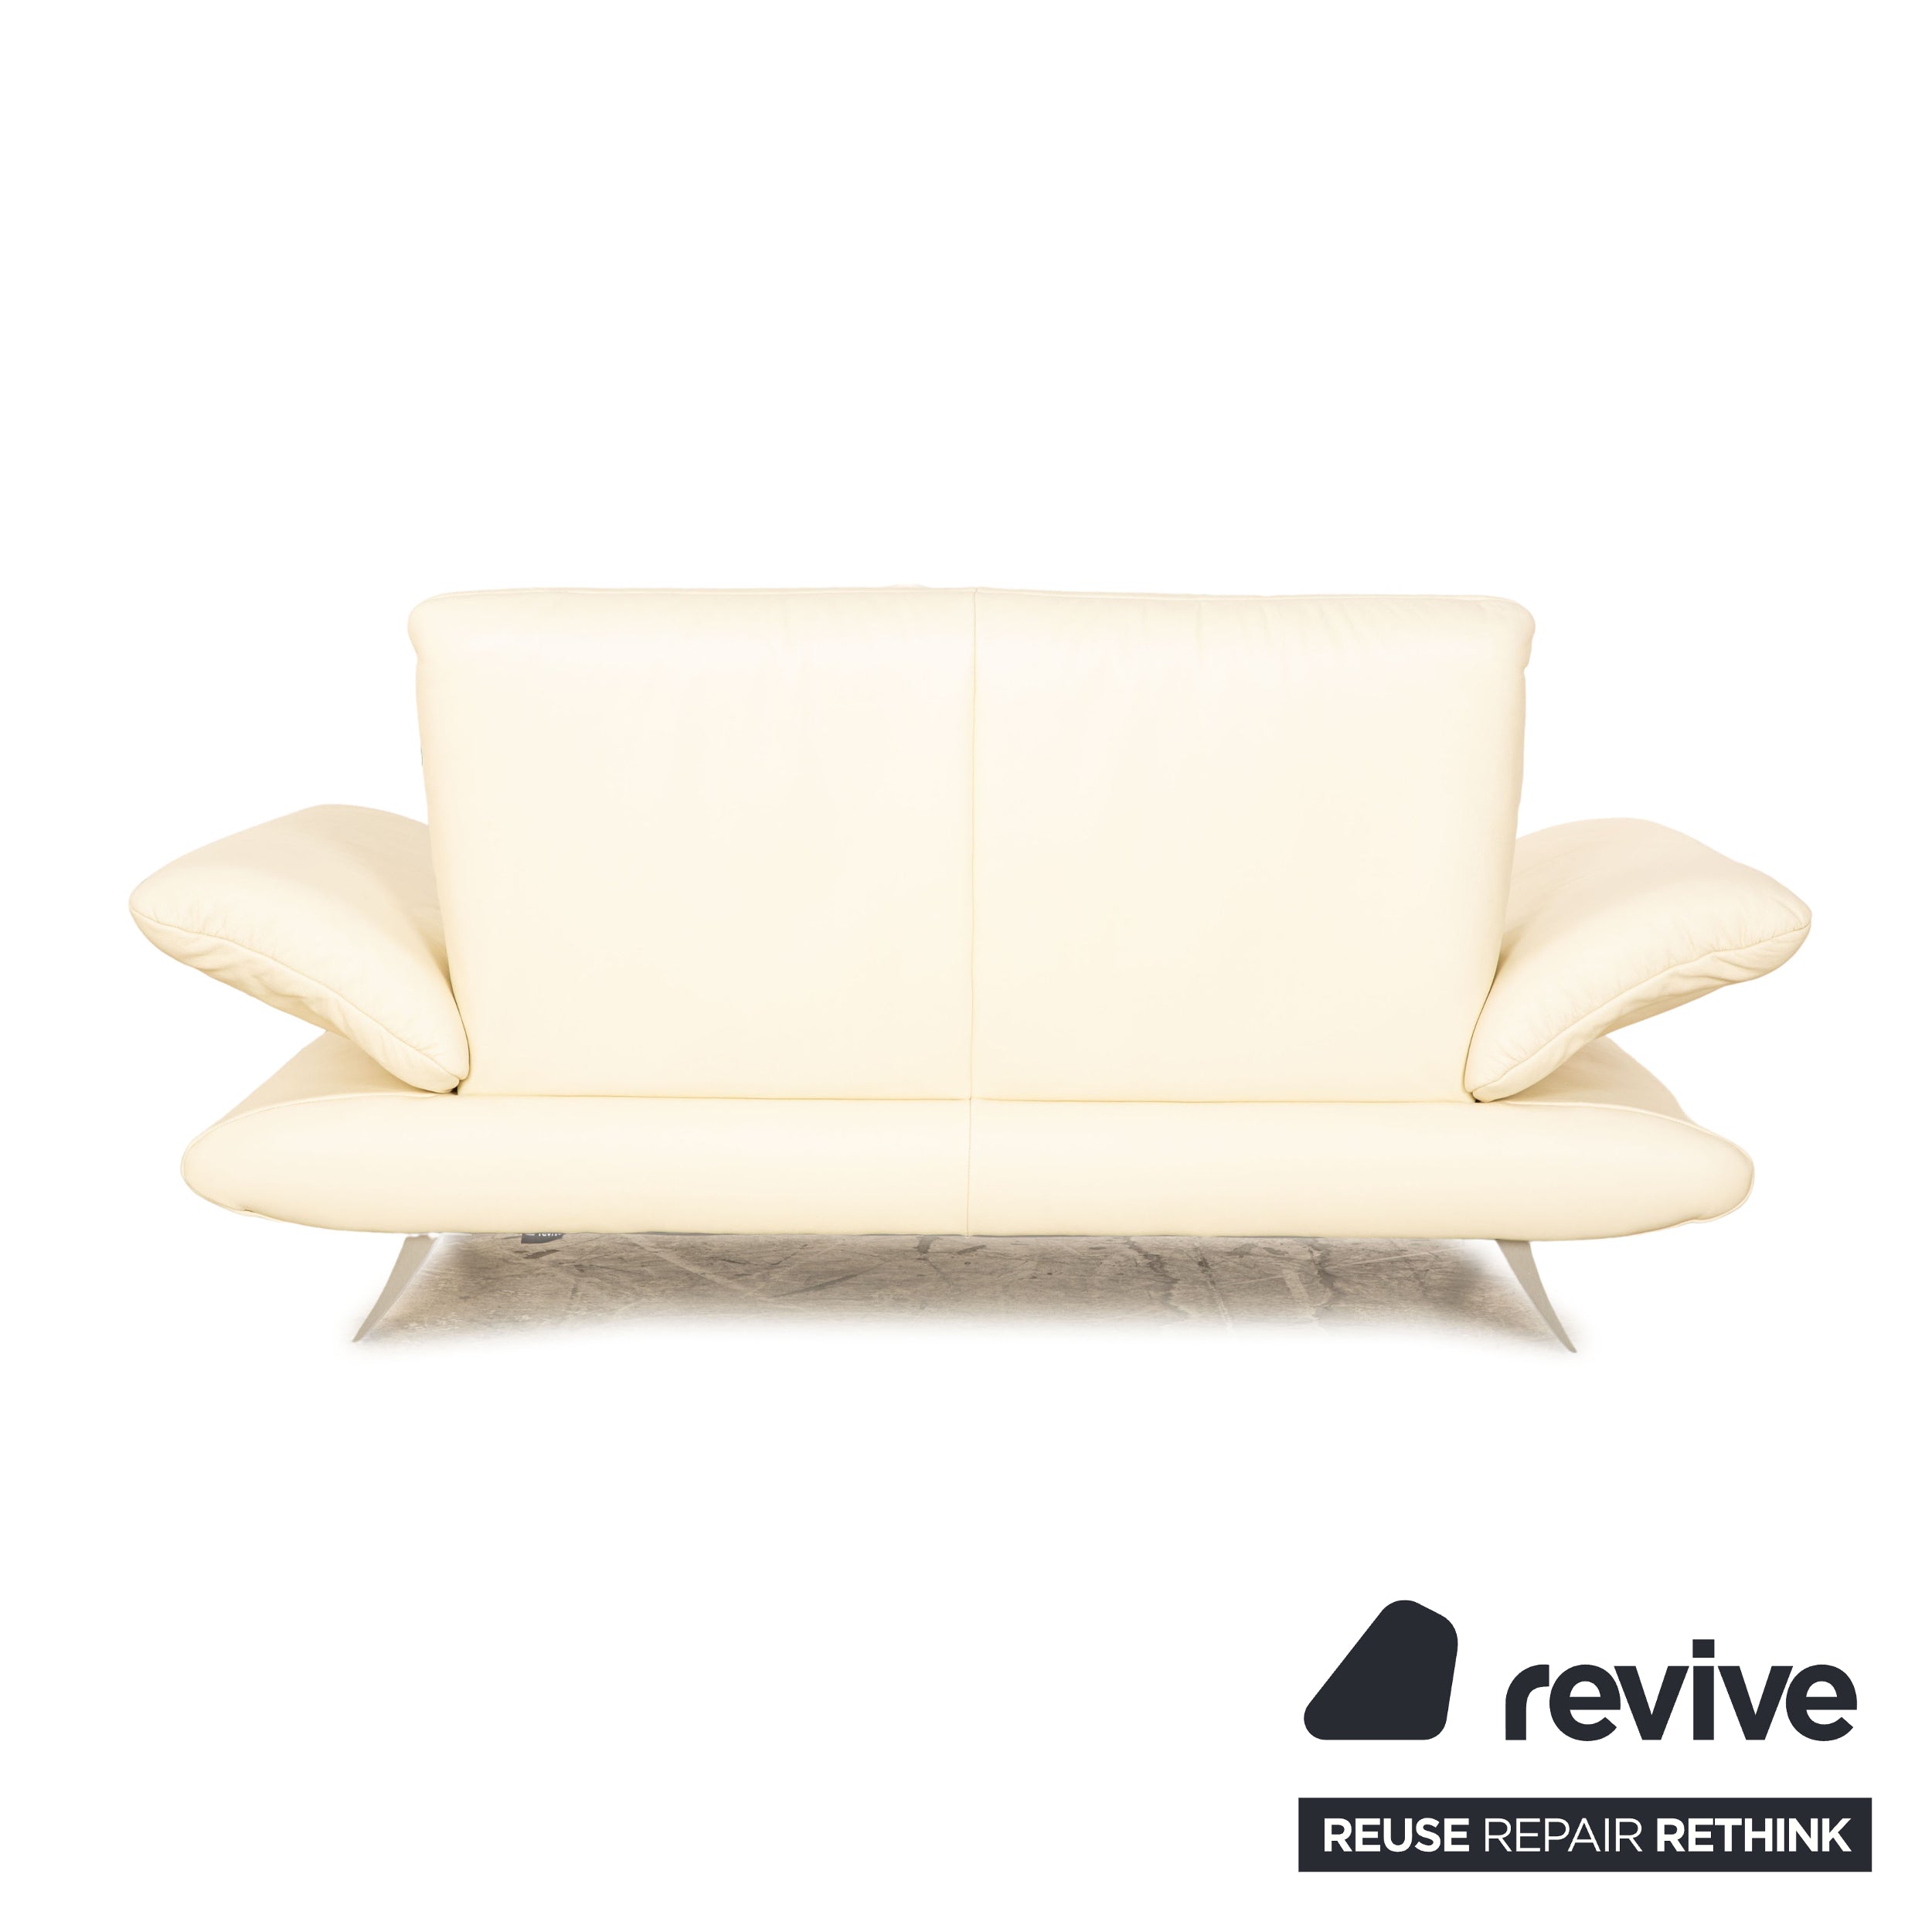 Koinor Rossini Leder Sofa Garnitur Creme manuelle Funktion Zweisitzer Hocker Couch